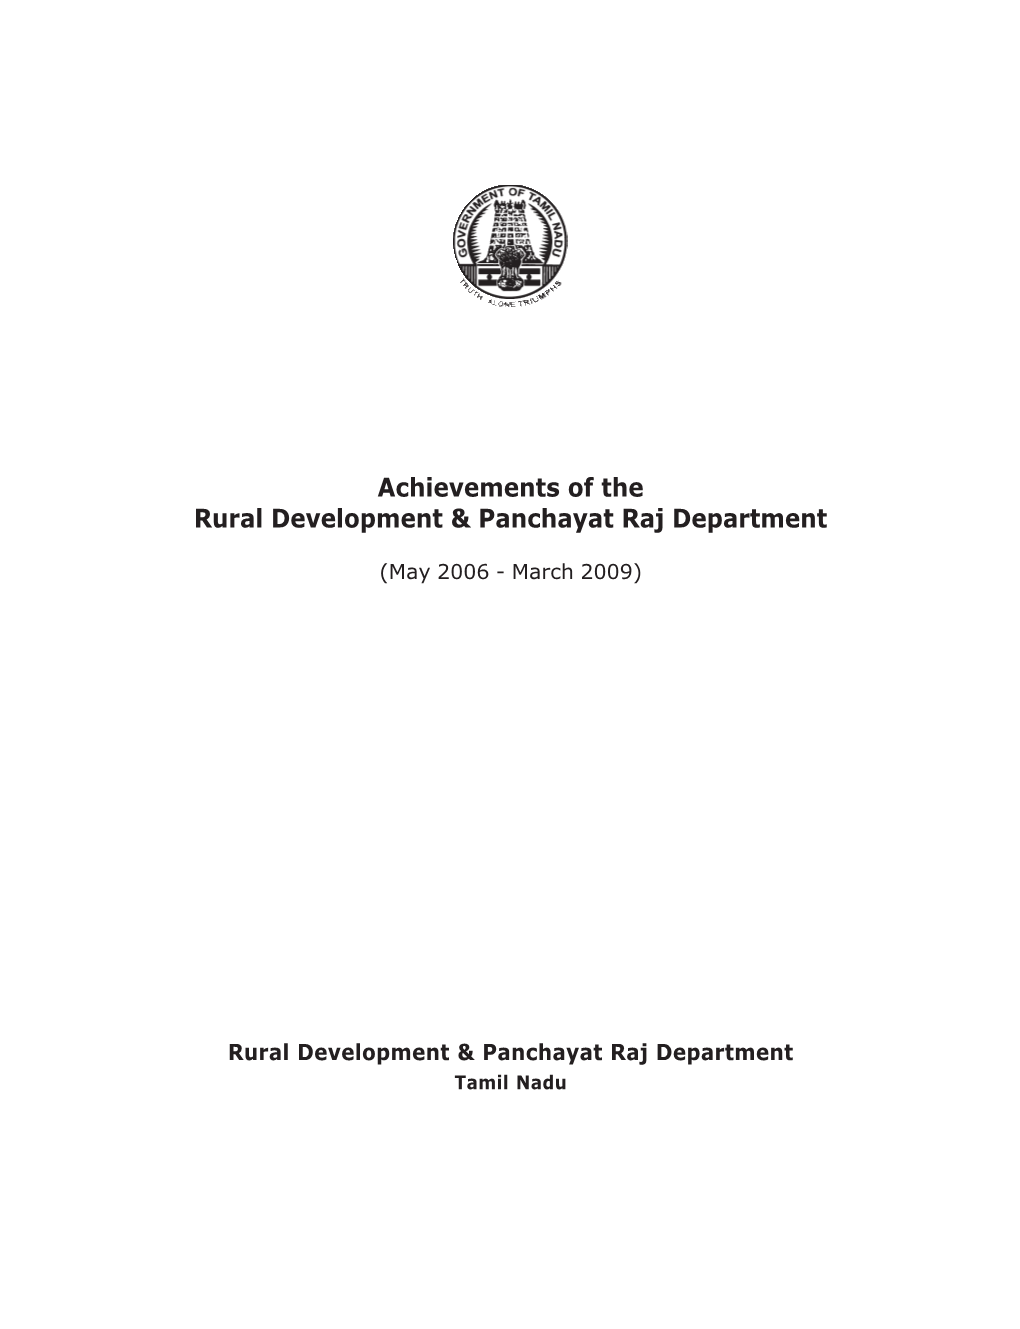 Achievements of the Rural Development & Panchayat Raj